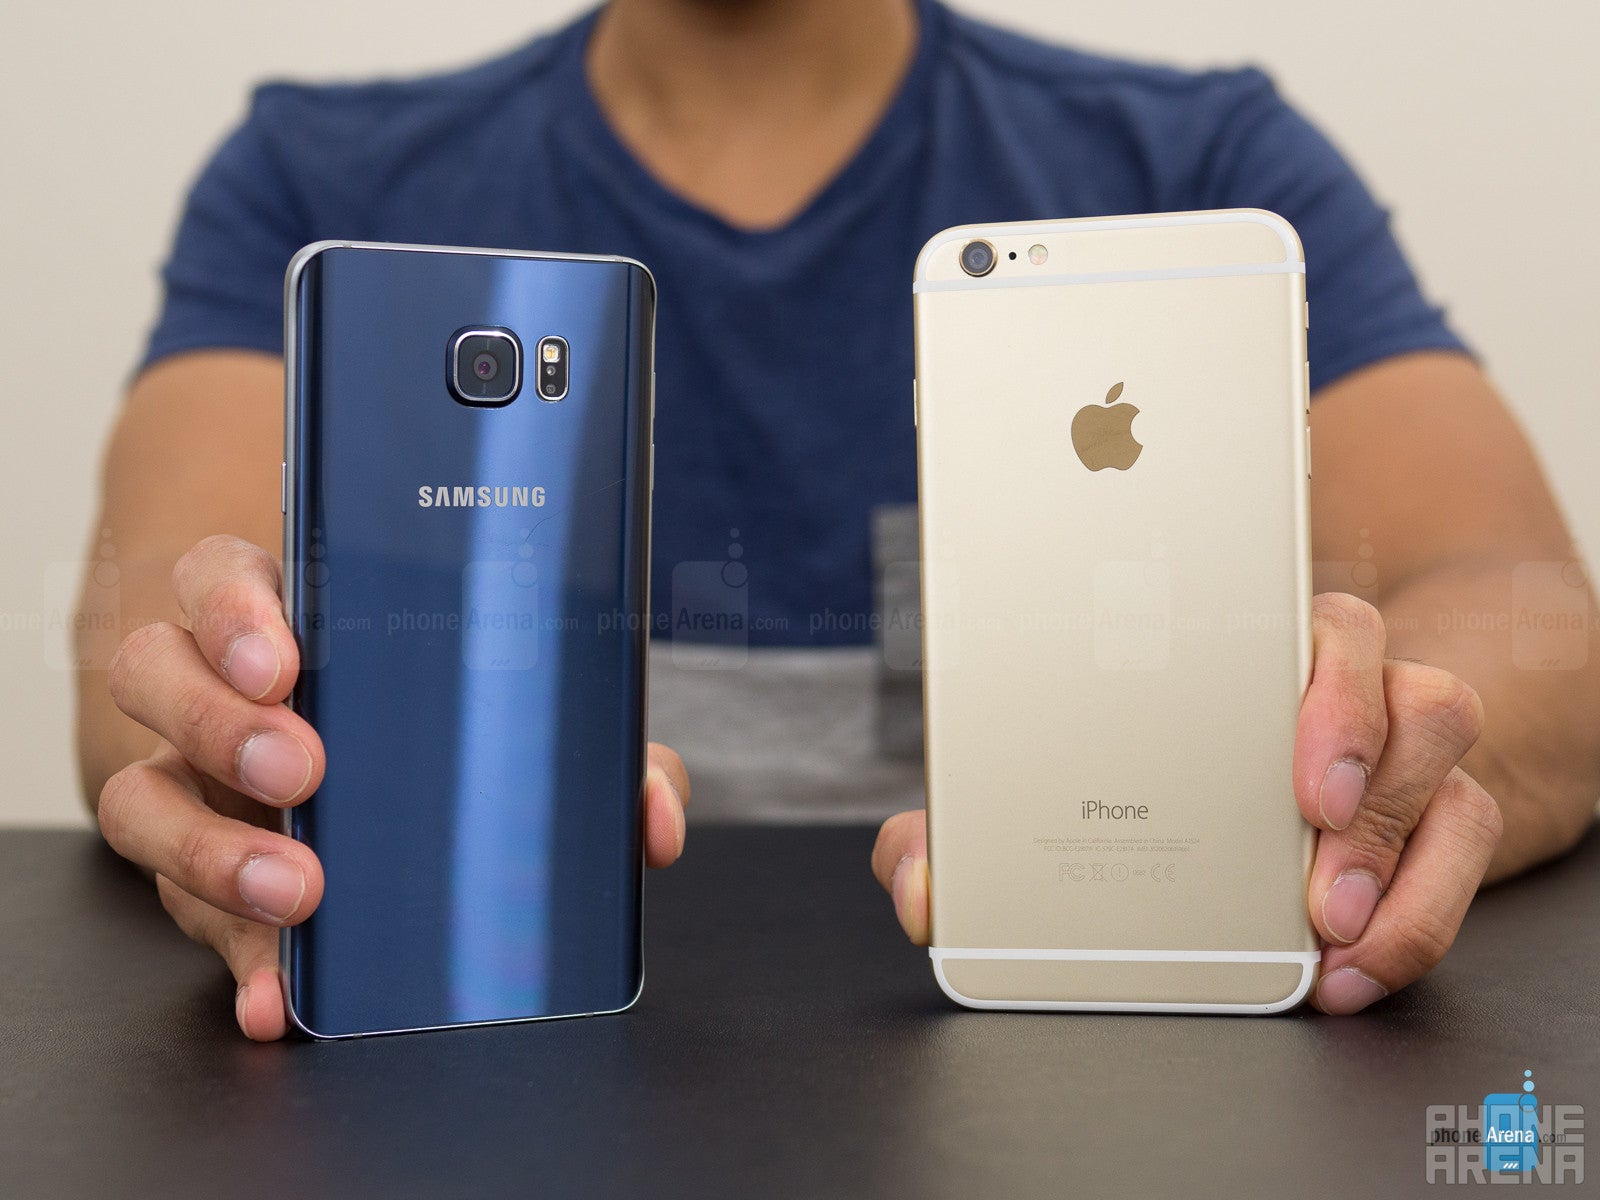 Samsung Galaxy Note5 vs Apple iPhone 6 Plus